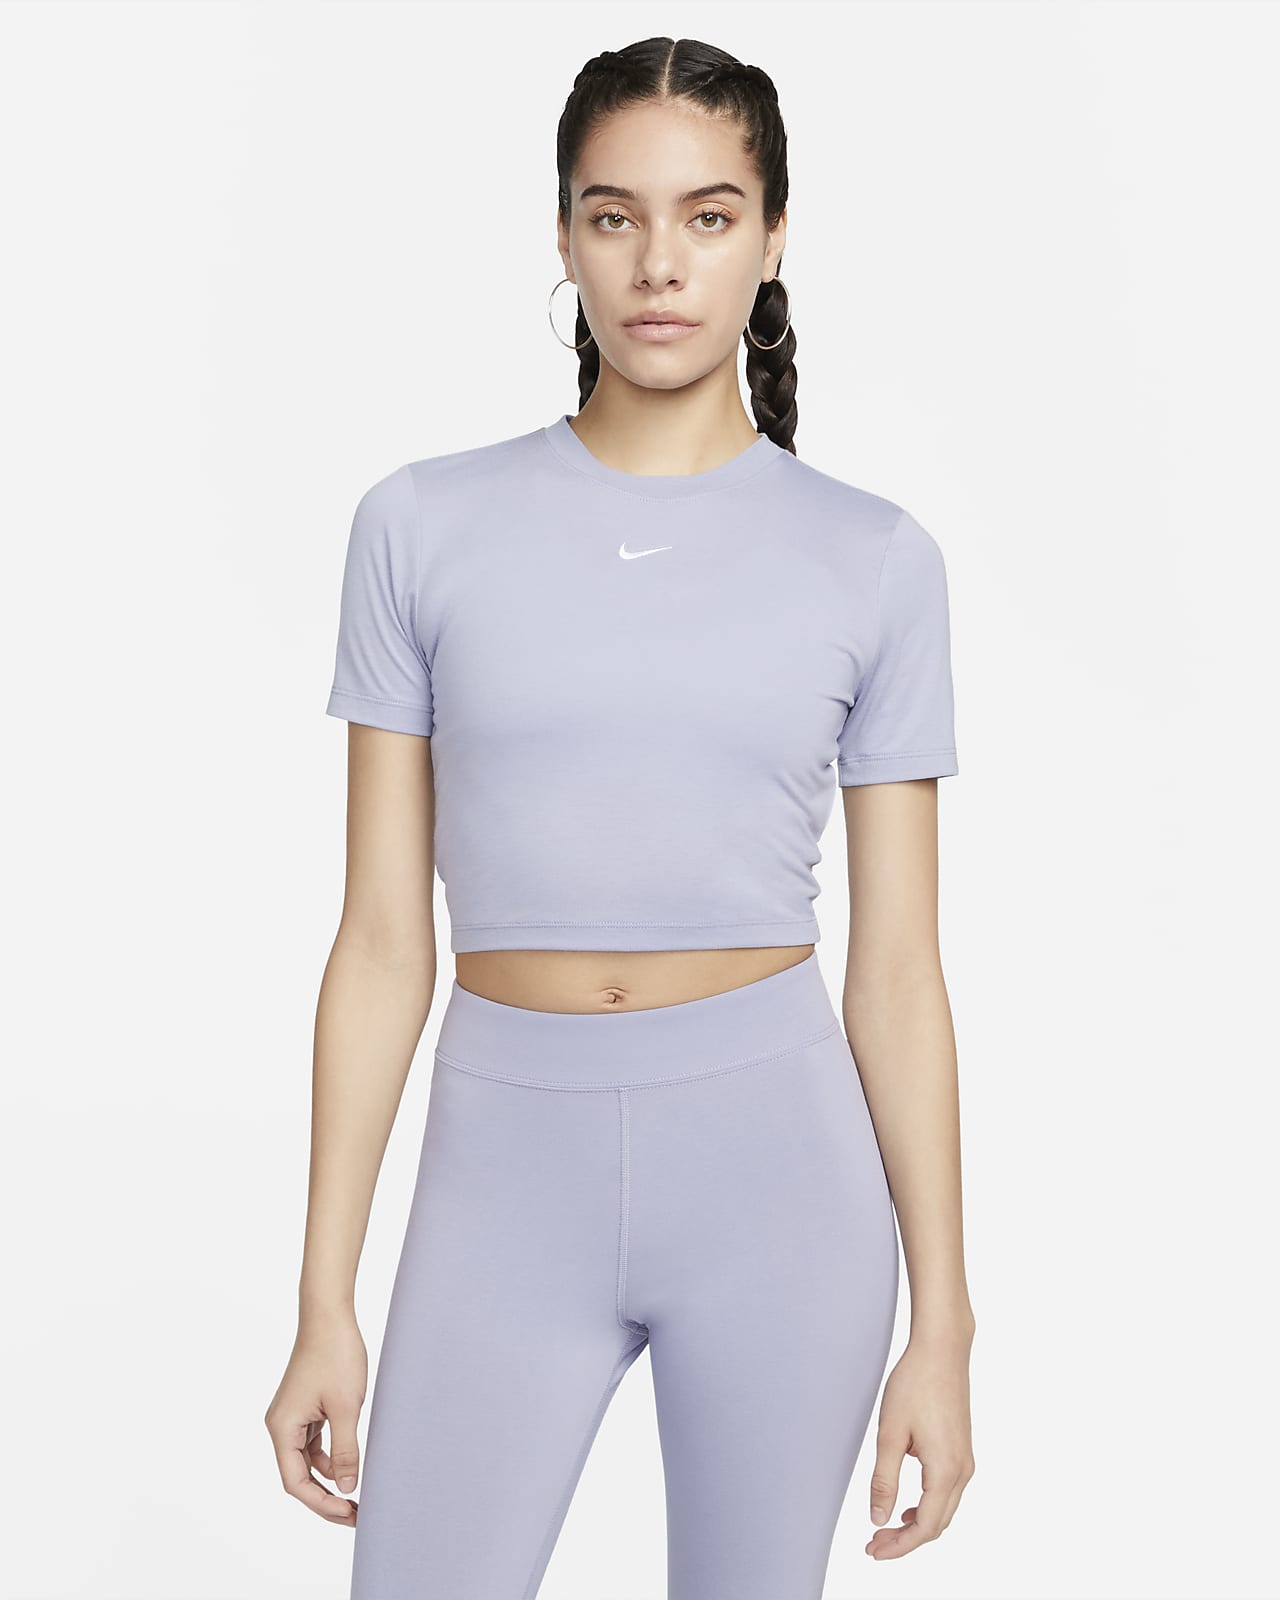 Nike And Adidas Women's Clothing | lupon.gov.ph